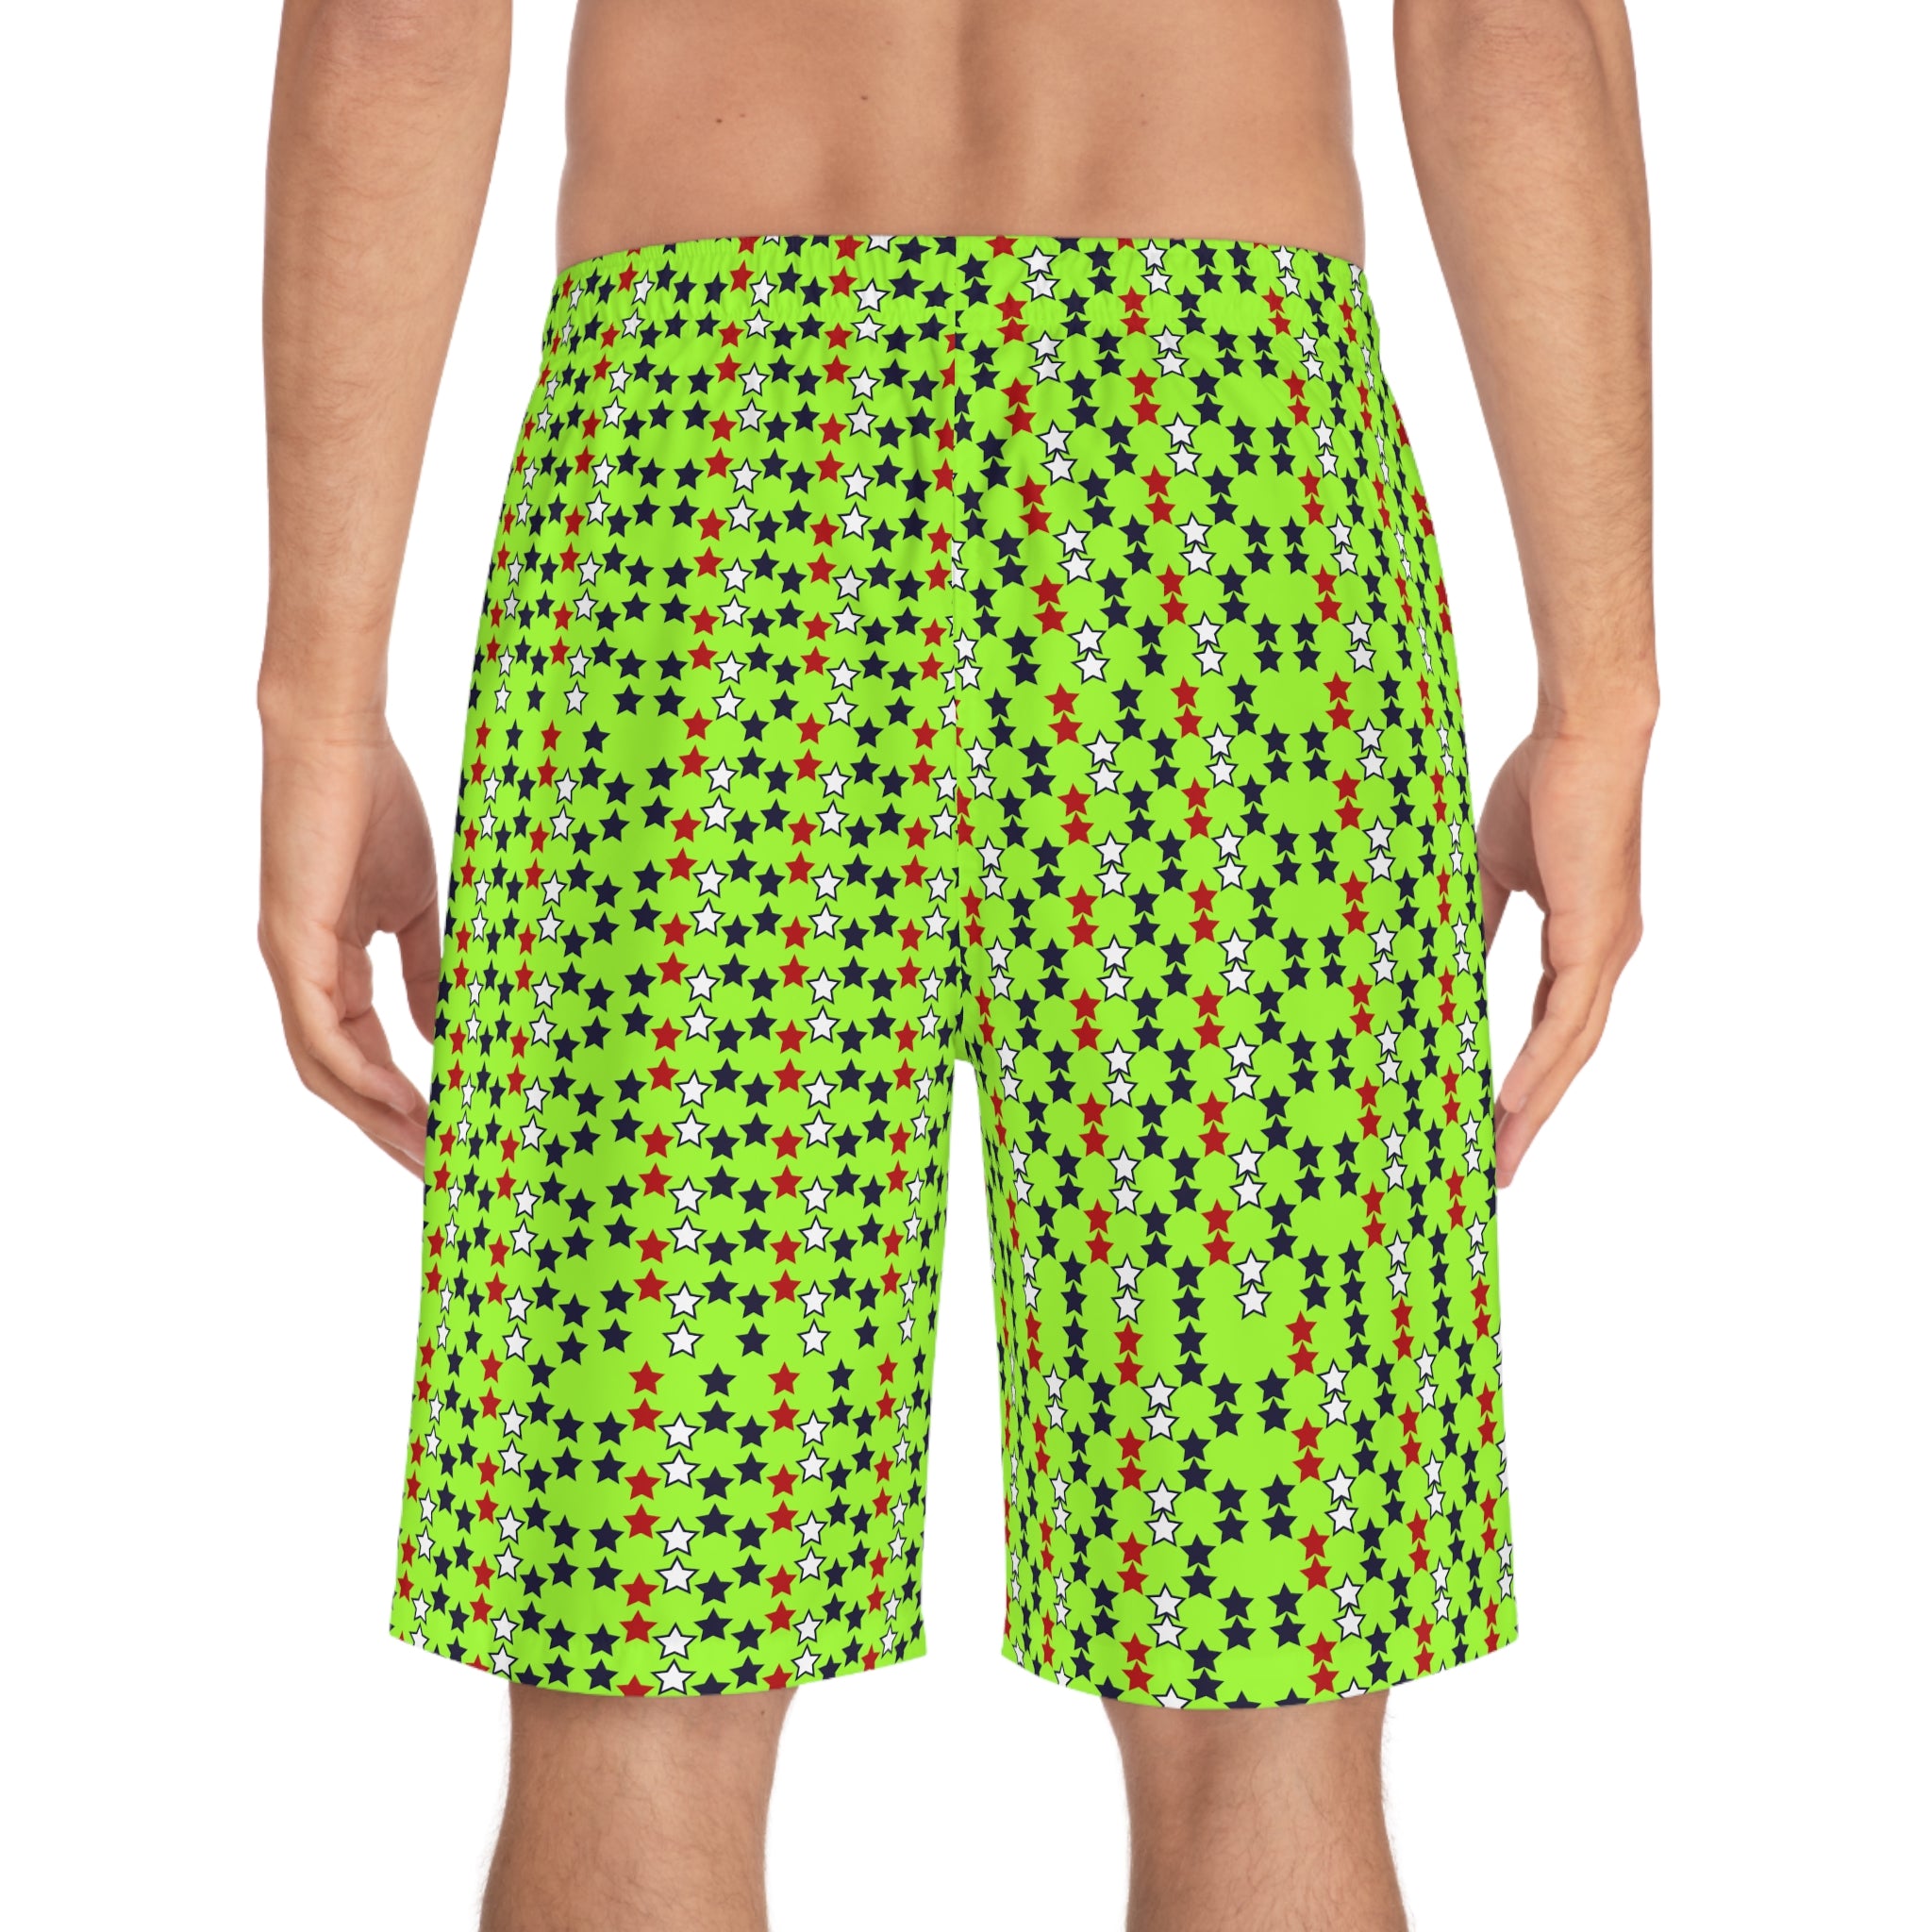 lime green star print board shorts for men